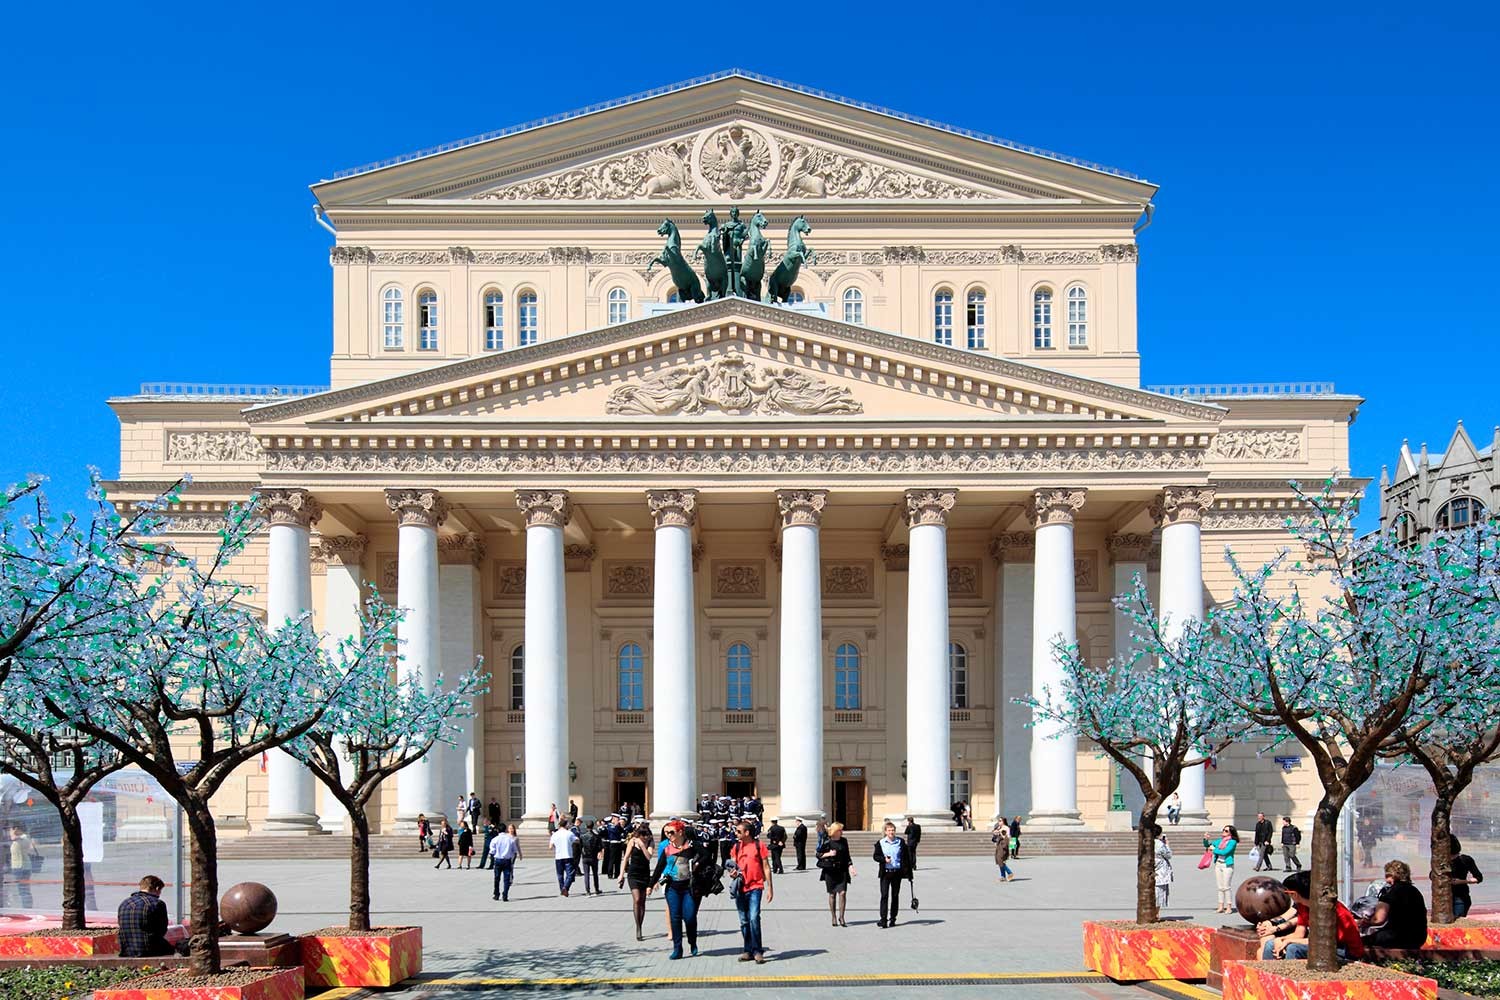 The Bolshoi Theatre began its history as an Englishmen's enterprise